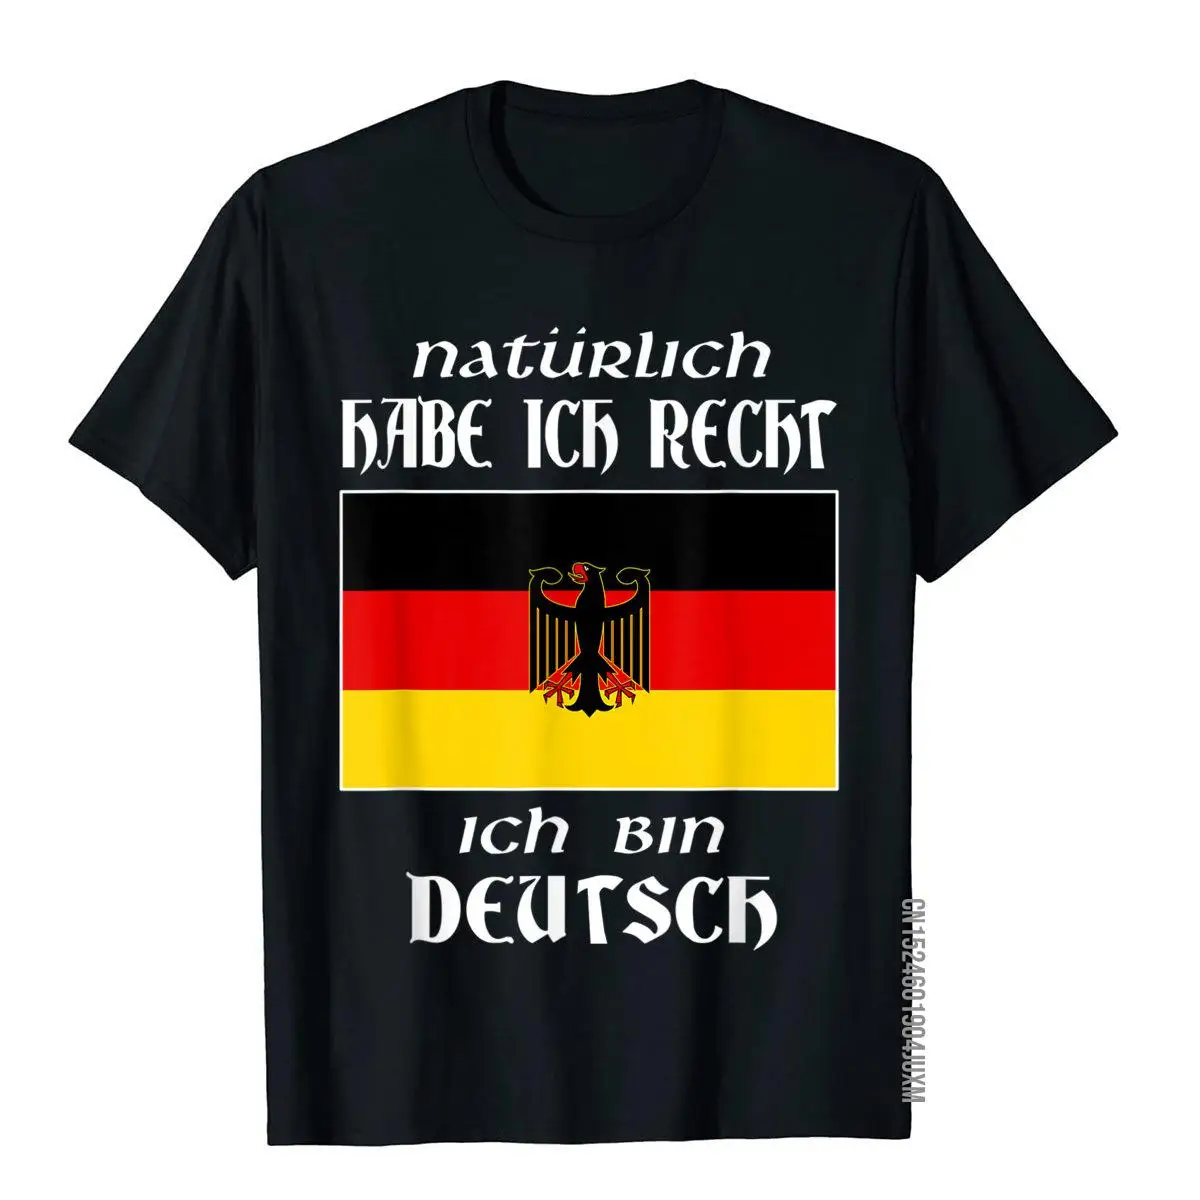 Ich Bin Deutsch T-shirt Funny German Language Germany Saying__97A3478black